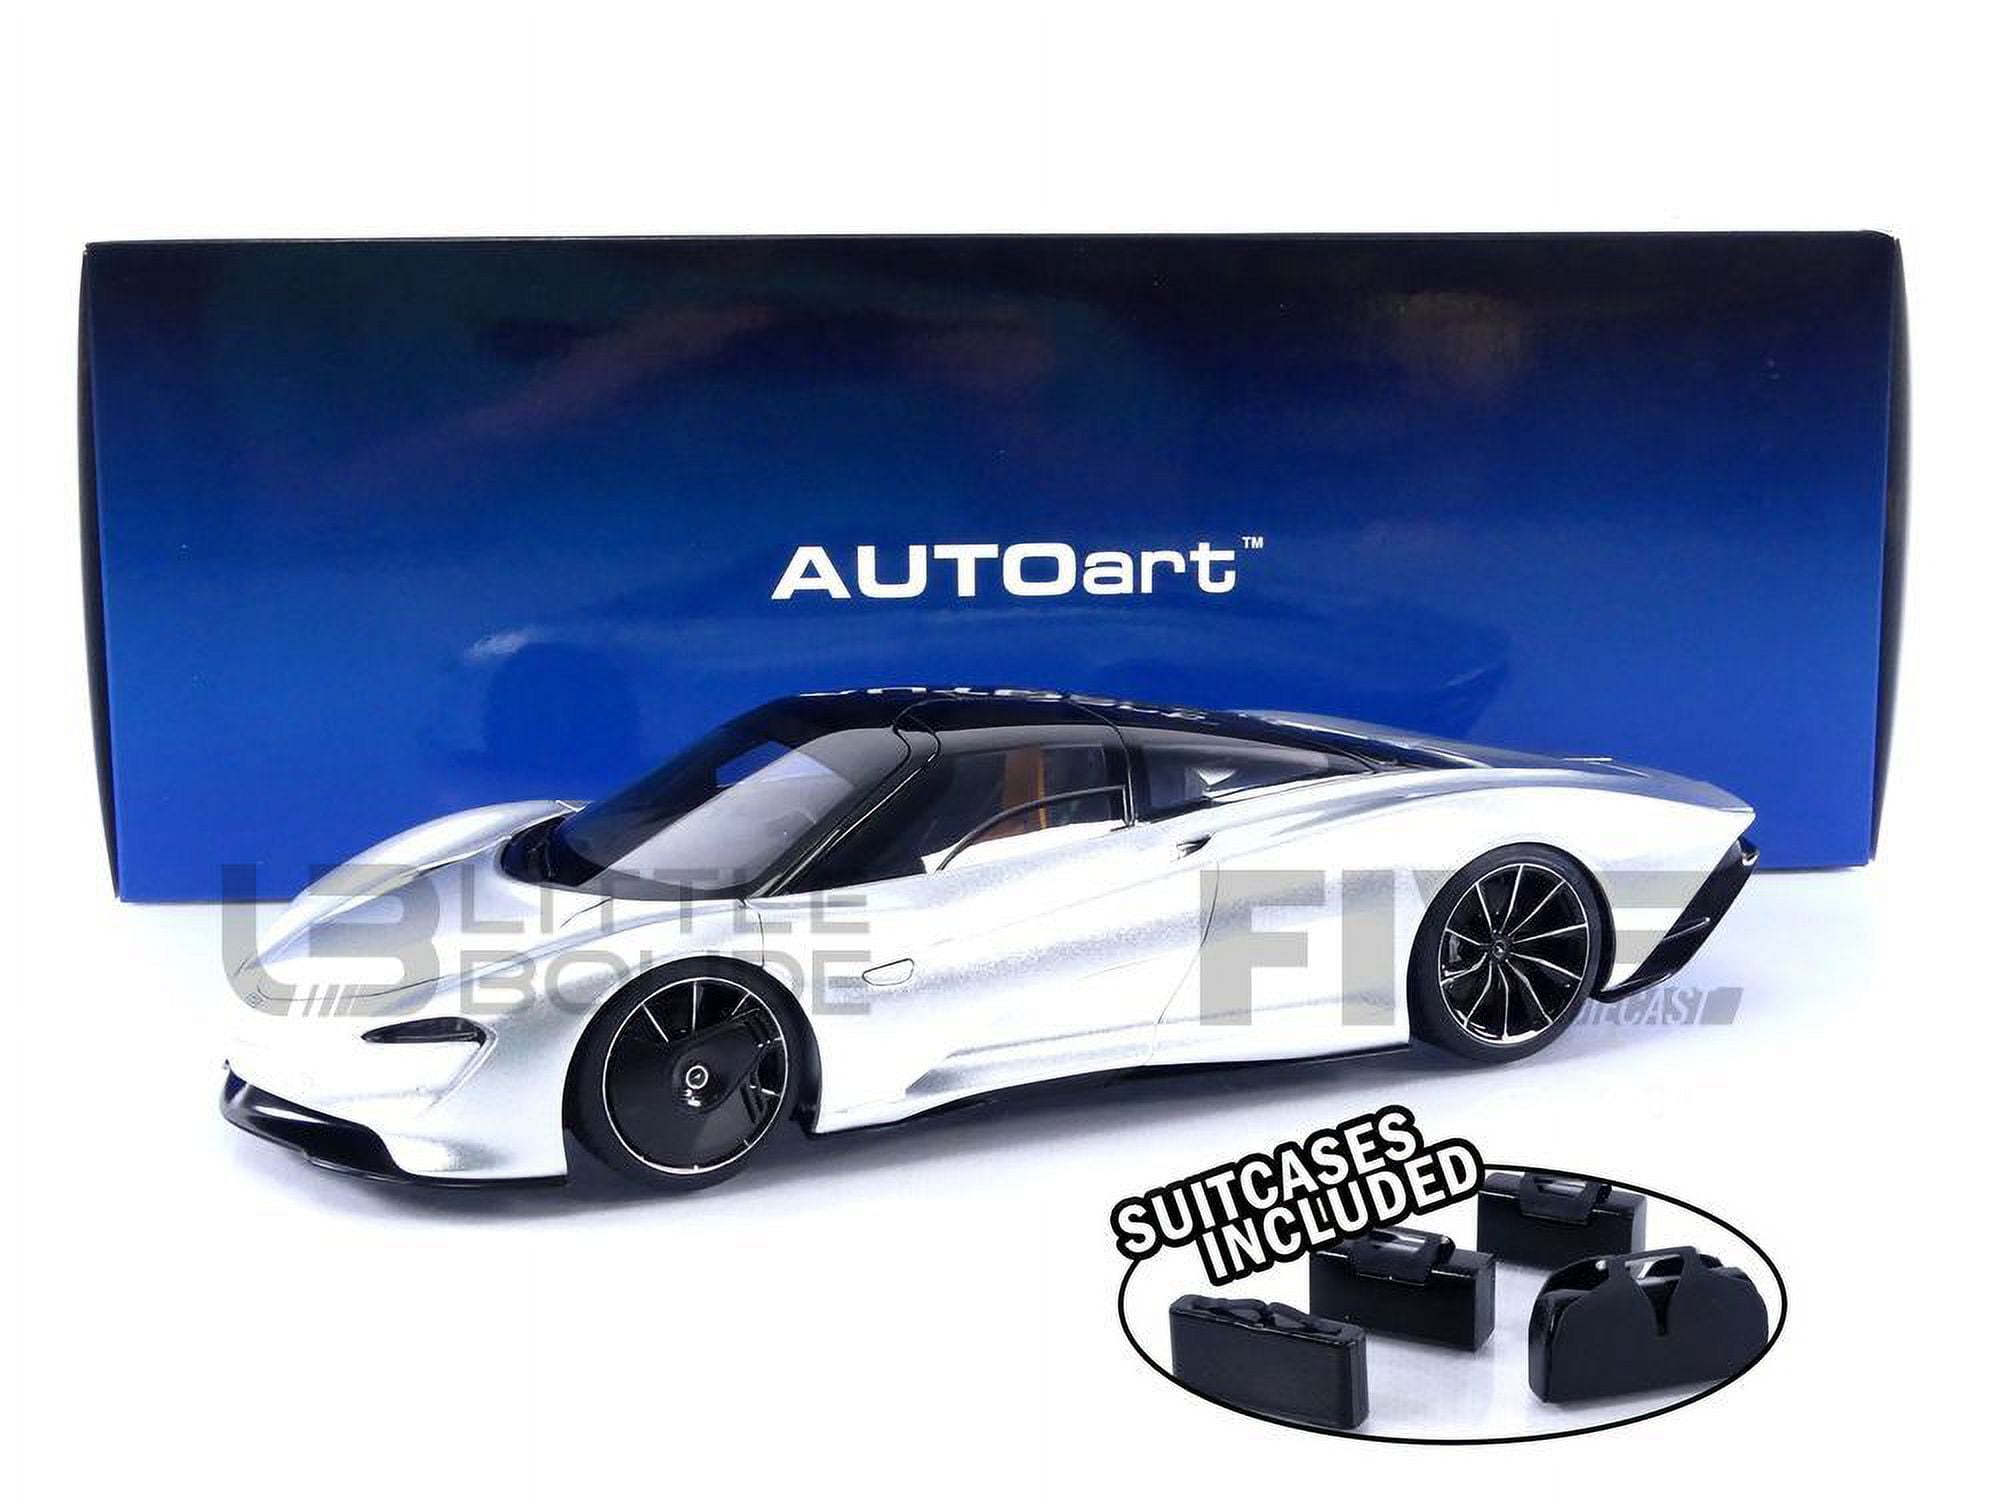 Picture of Autoart 76090 1-18 Scale McLaren Speedtail Supernova Silver Metallic with Black Top & Suitcase Accessories Model Car